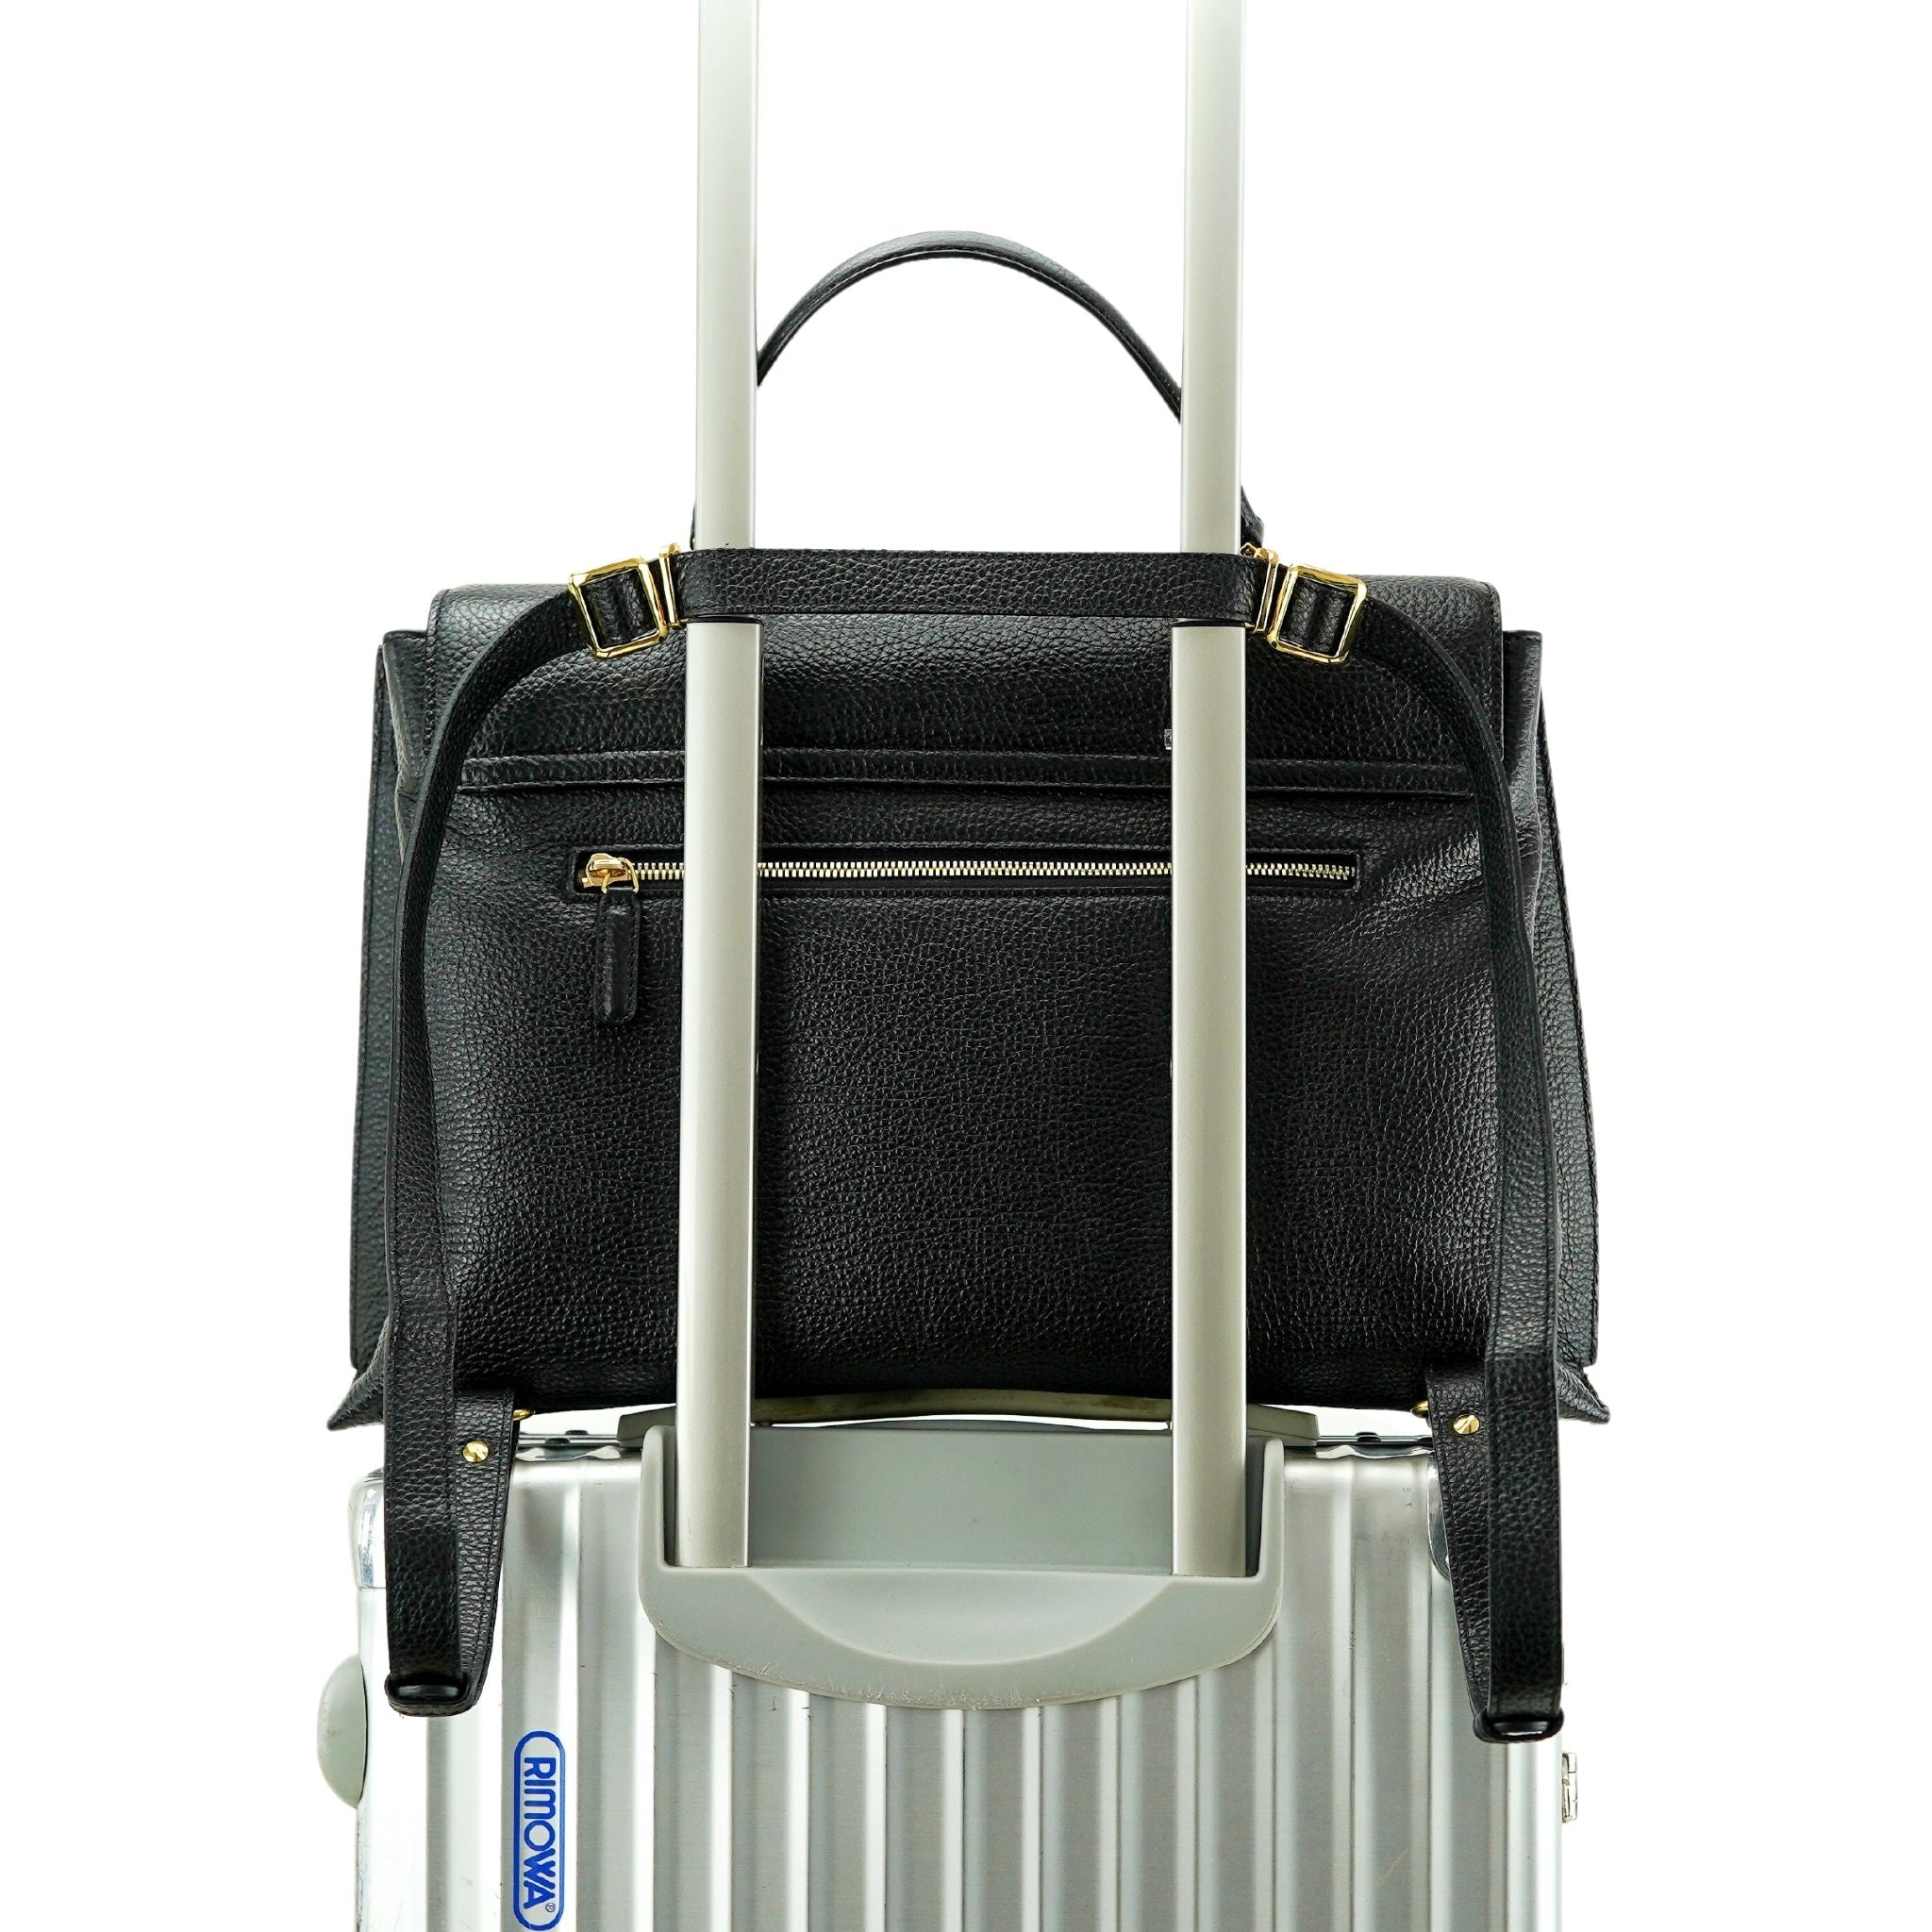 AMELI Zurich | VIADUKT WORK | Black | Soft Grain Leather | On A Suitcase